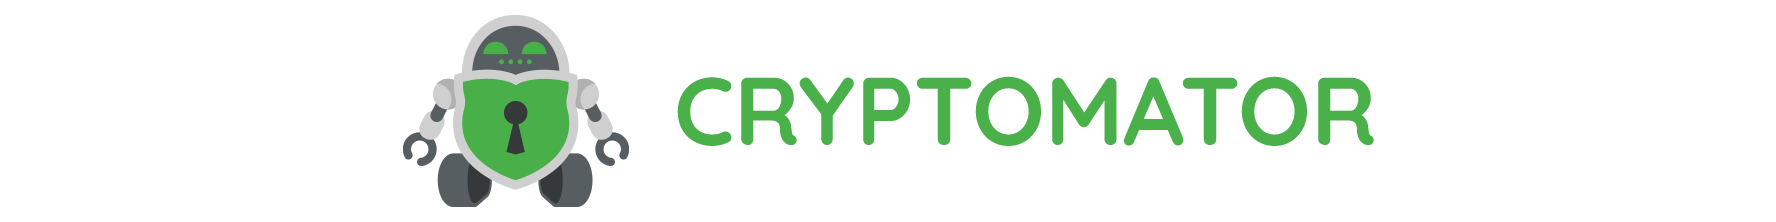 cryptomator.png